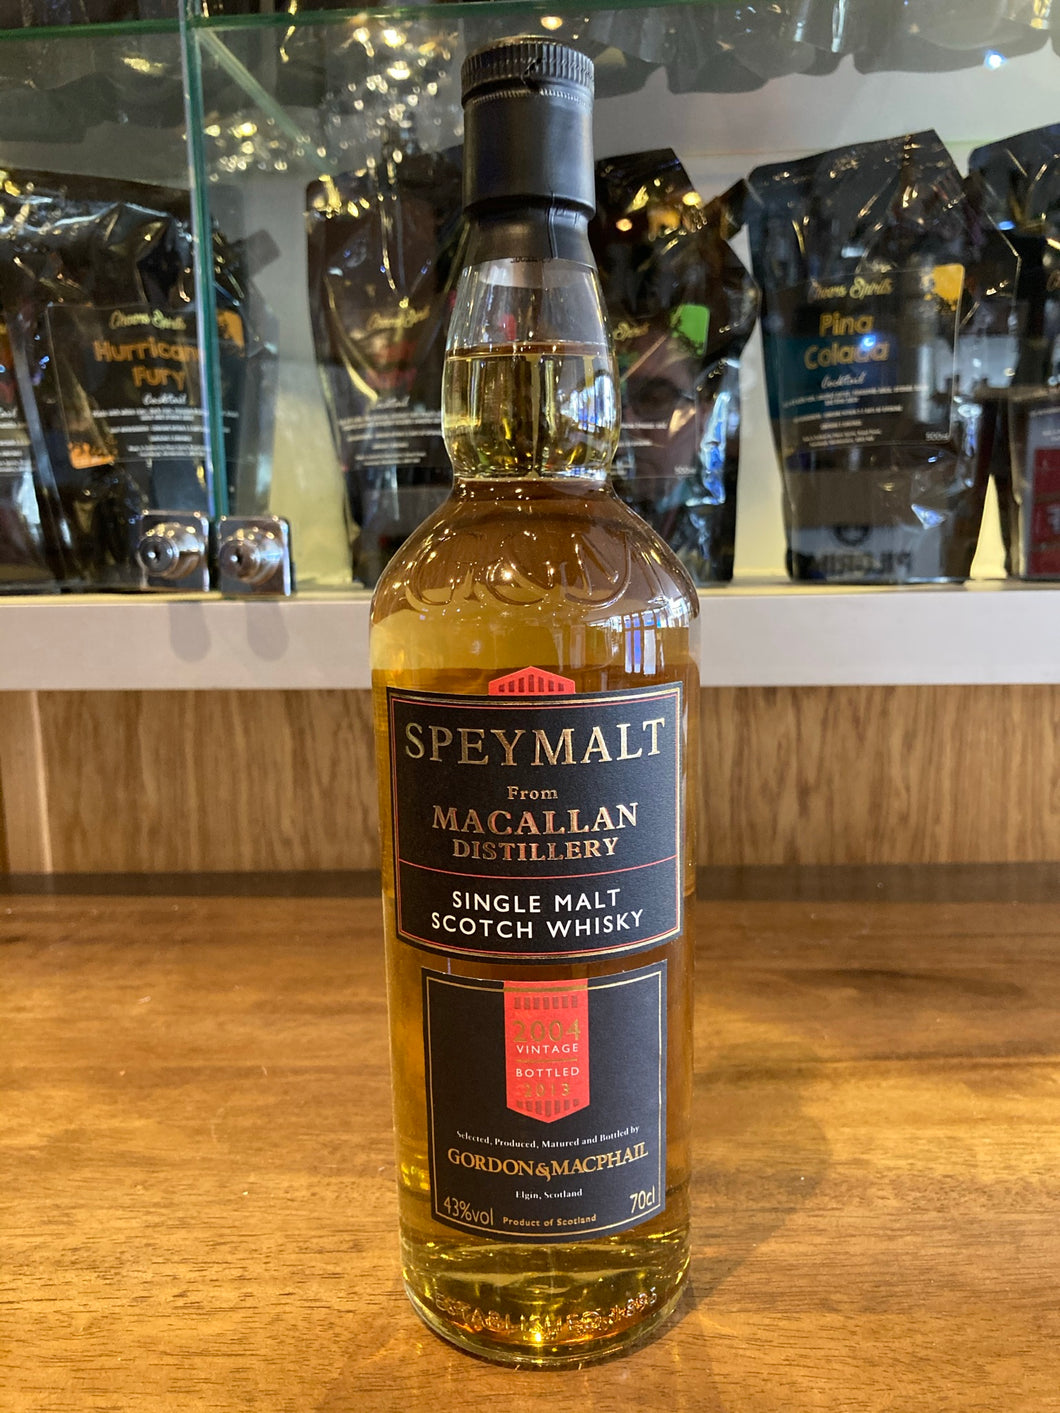 Macallan Speymalt 2004 (Bottled 2013), 43.0% abv